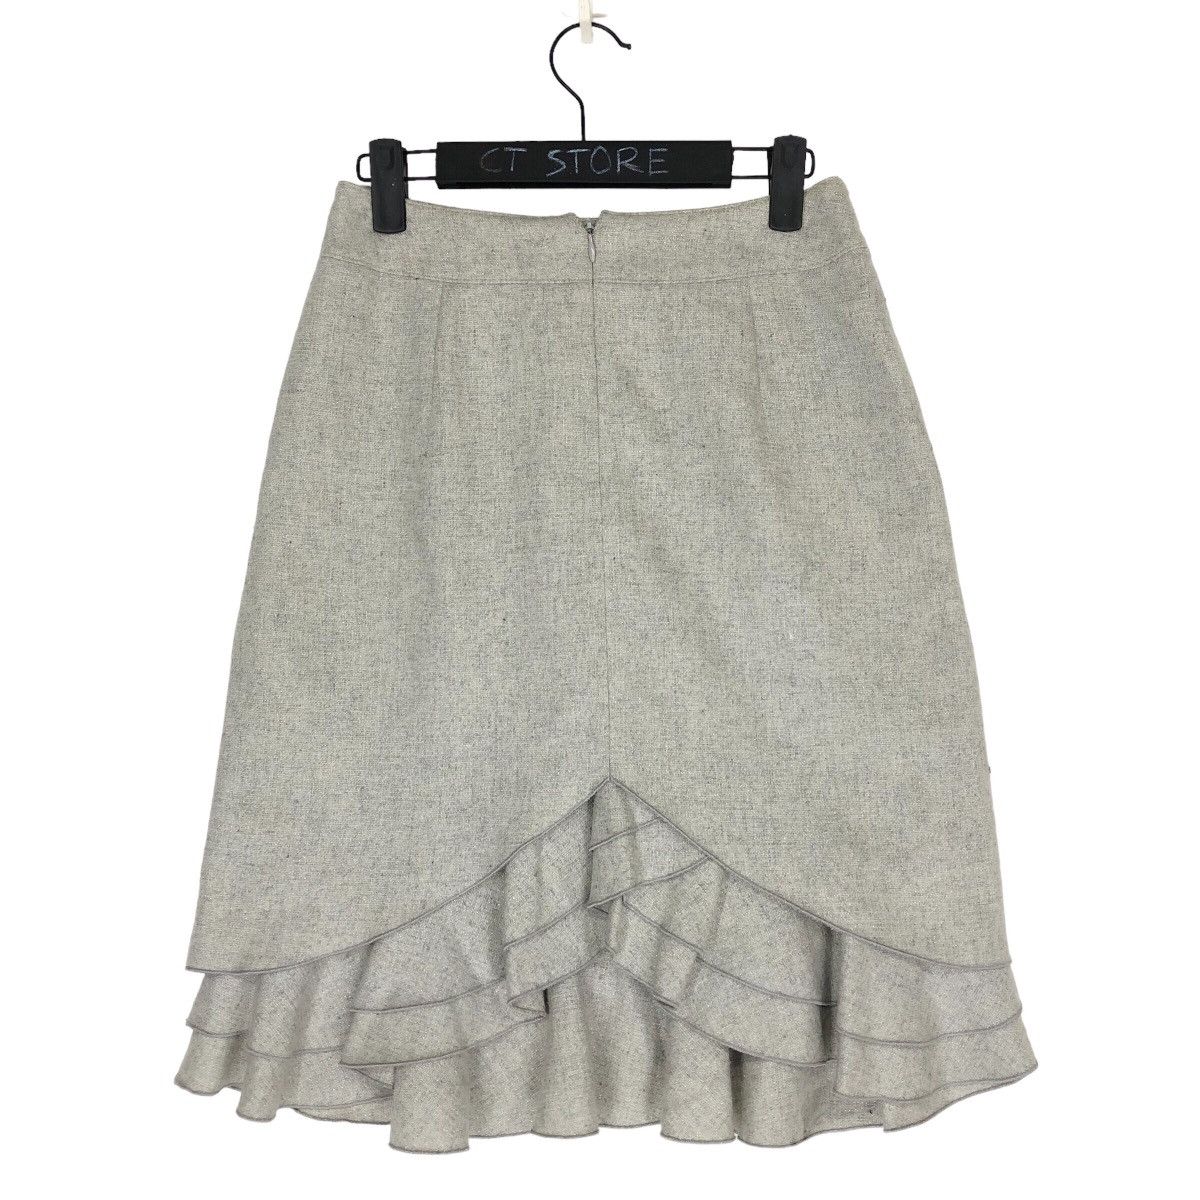 Franco Ferraro Milano Ruffled Skirt - 2